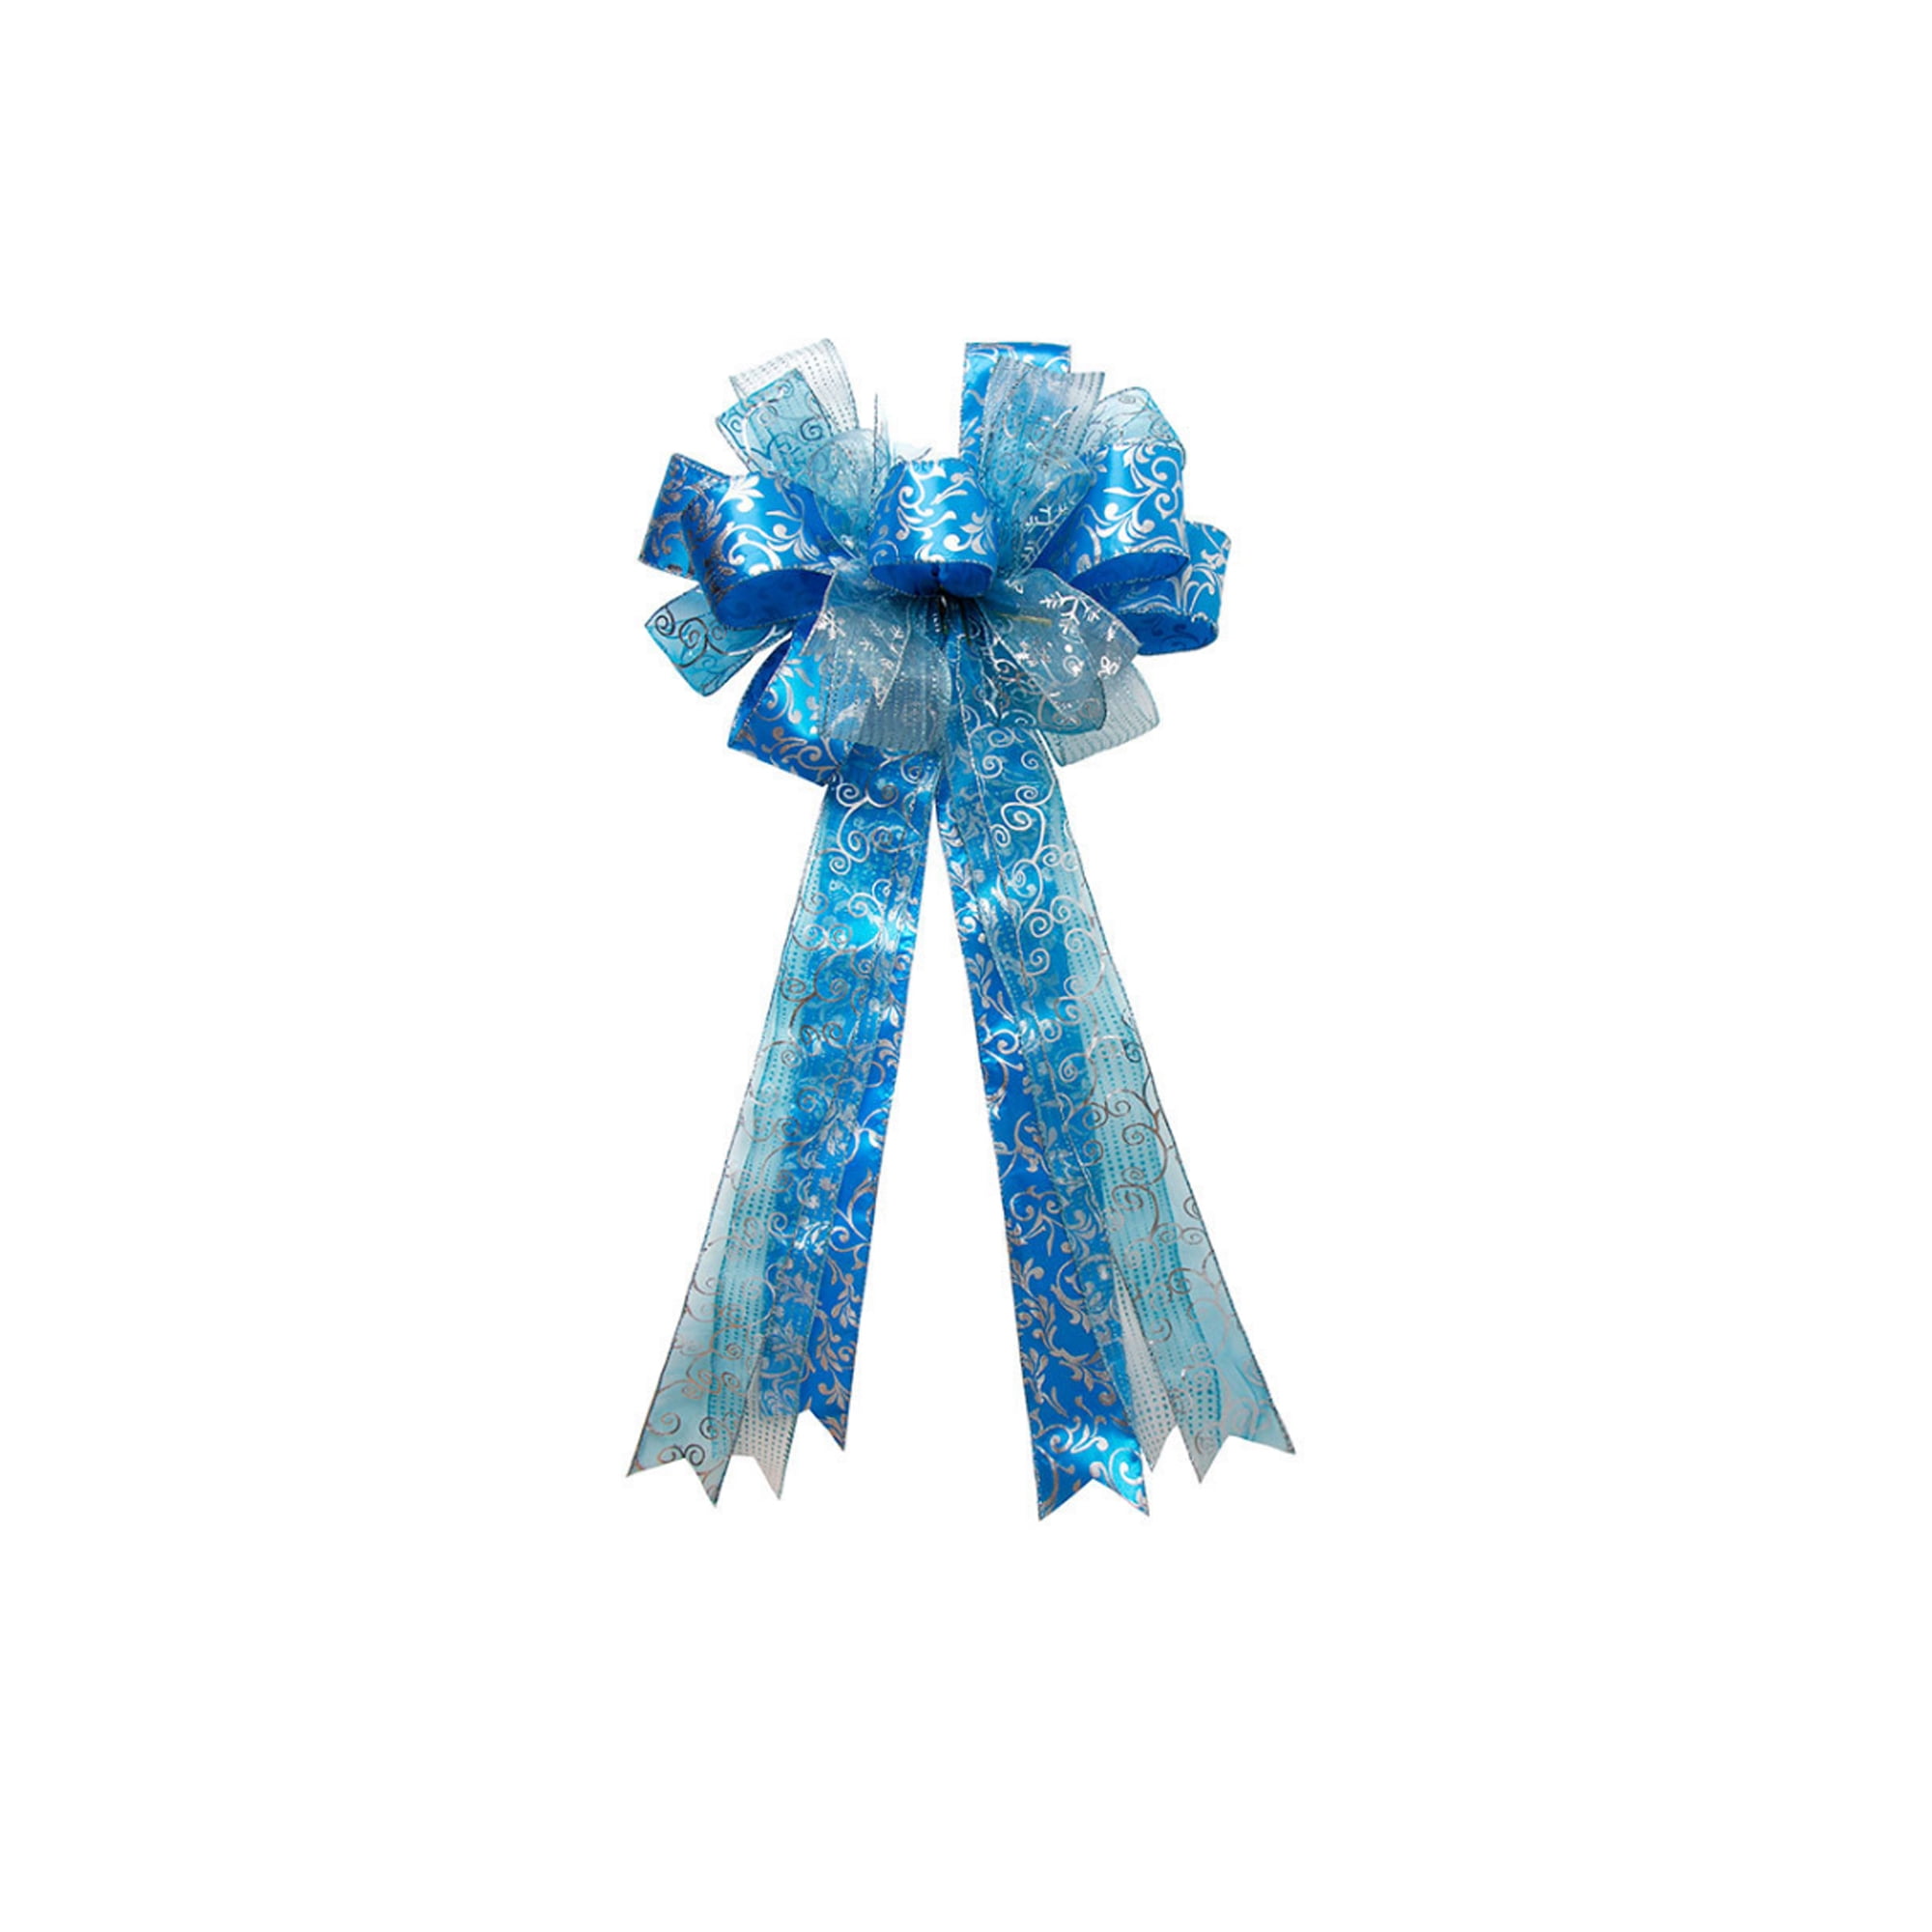 Details about   Glitter Ribbon Bows Xmas Decor LED Light Bowknot Tree Party Ornament Handmade